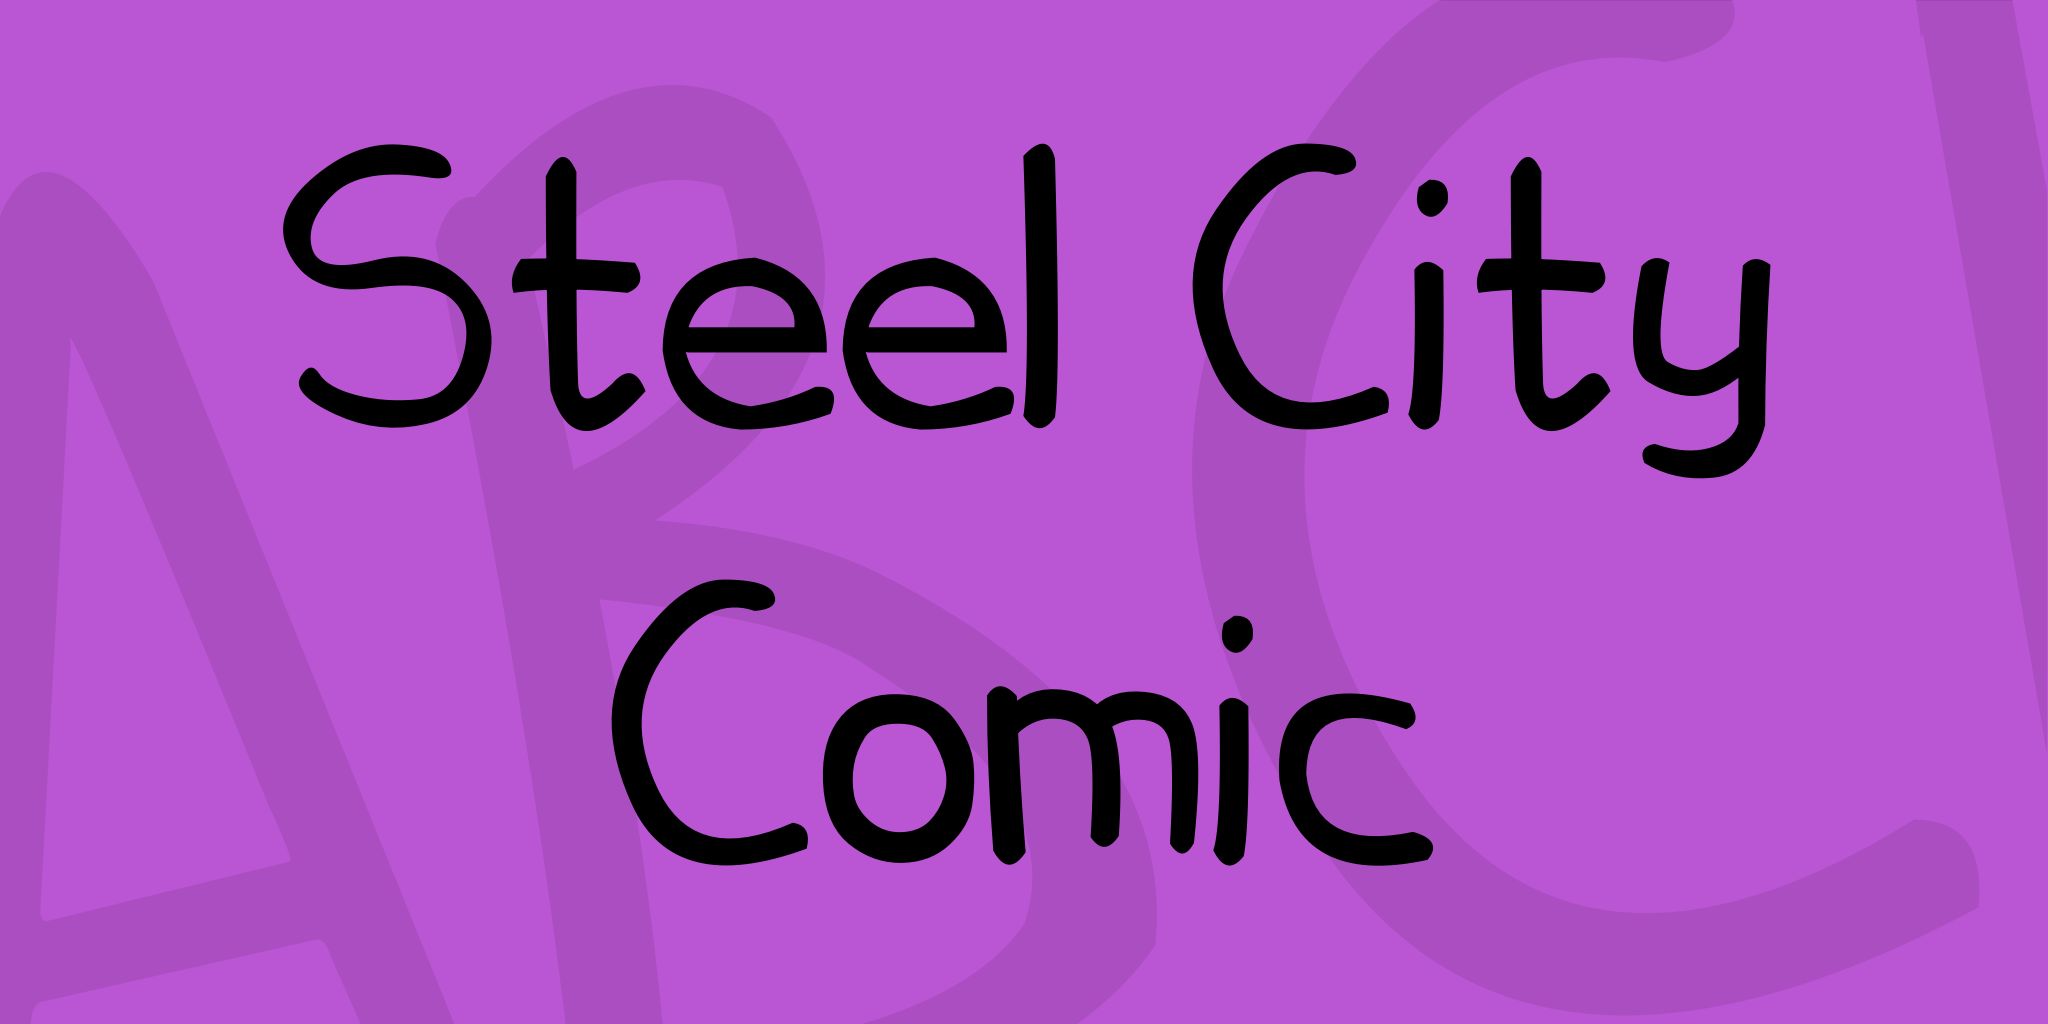 Steel City Comic